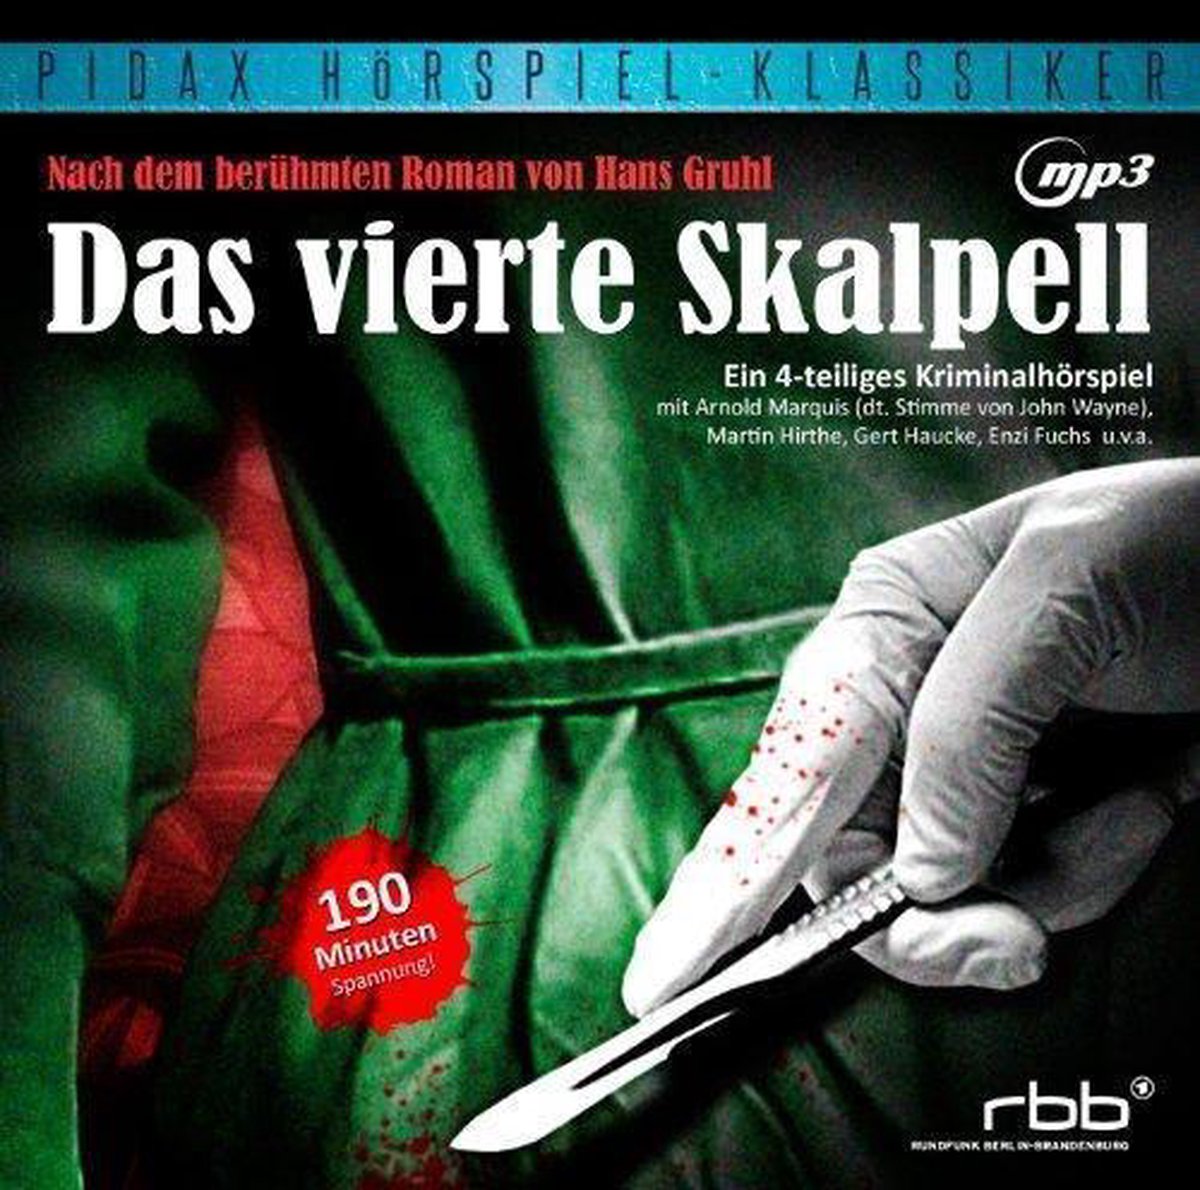 Alive AG Das vierte Skalpell, CD, Misdaadboek, 2D, Gruhl, Hans, Pidax film media Ltd., Misdaadboek